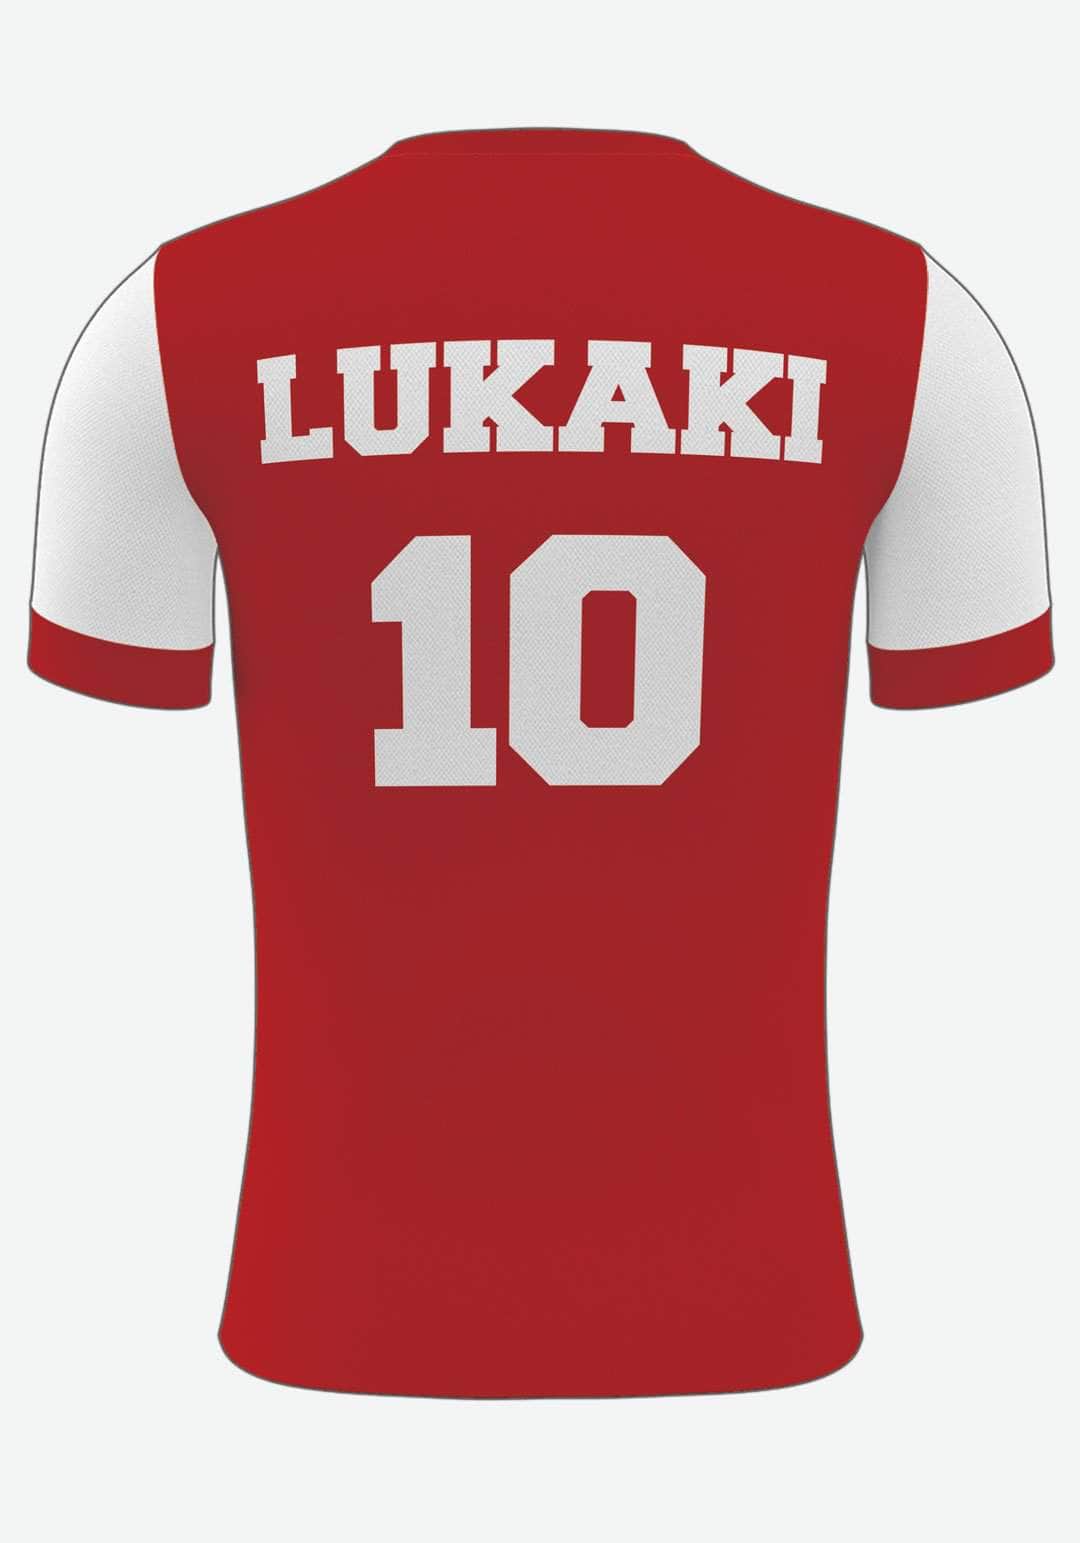 Se Arsenal Fodboldplakat - med eget navn og nummer, 50x70 hos Lukaki.dk